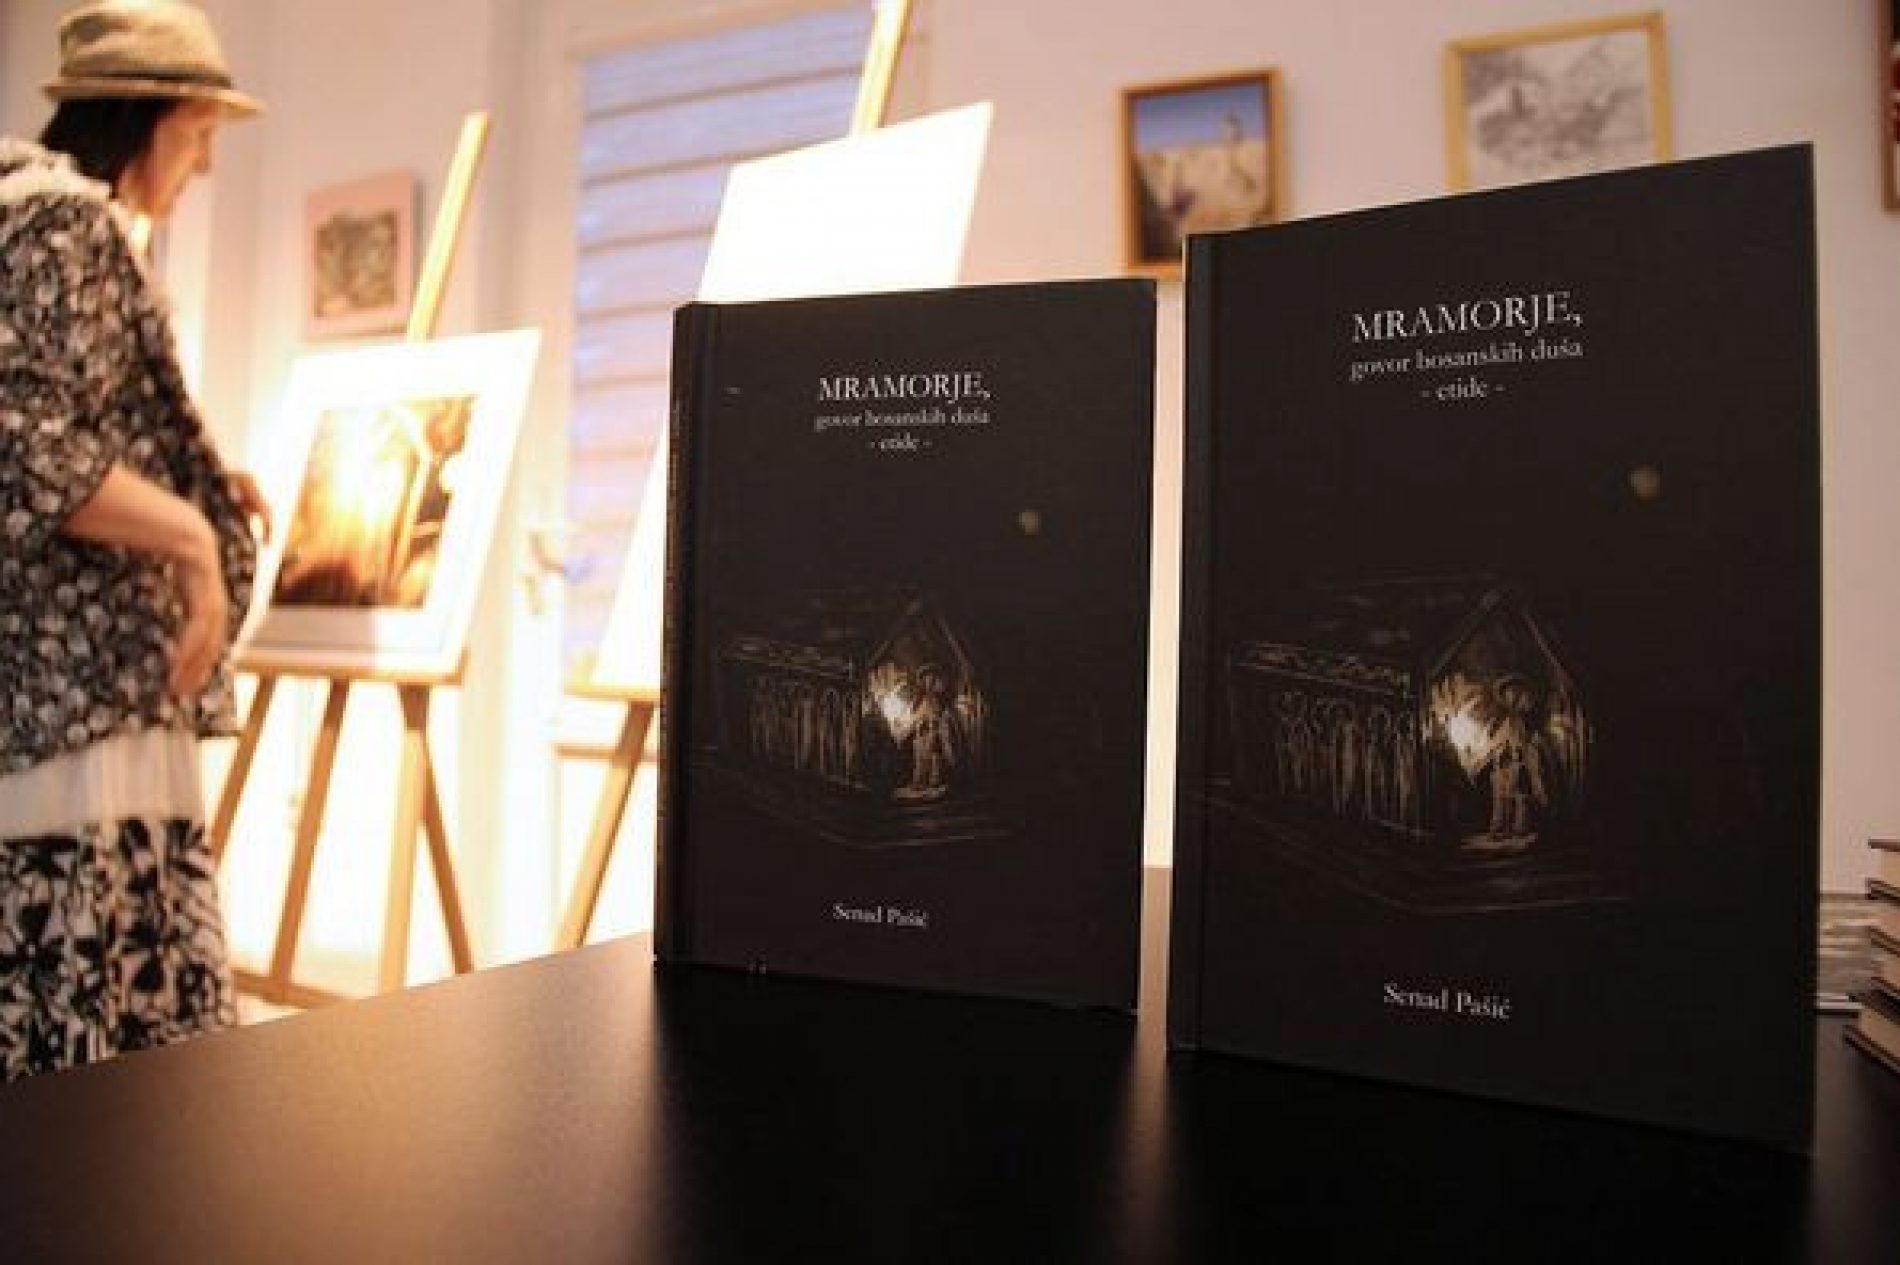 “Mostarsko ljeto” : Promovirana knjiga i otvorena izložba „Mramorje, govor bosanskih duša – etide”